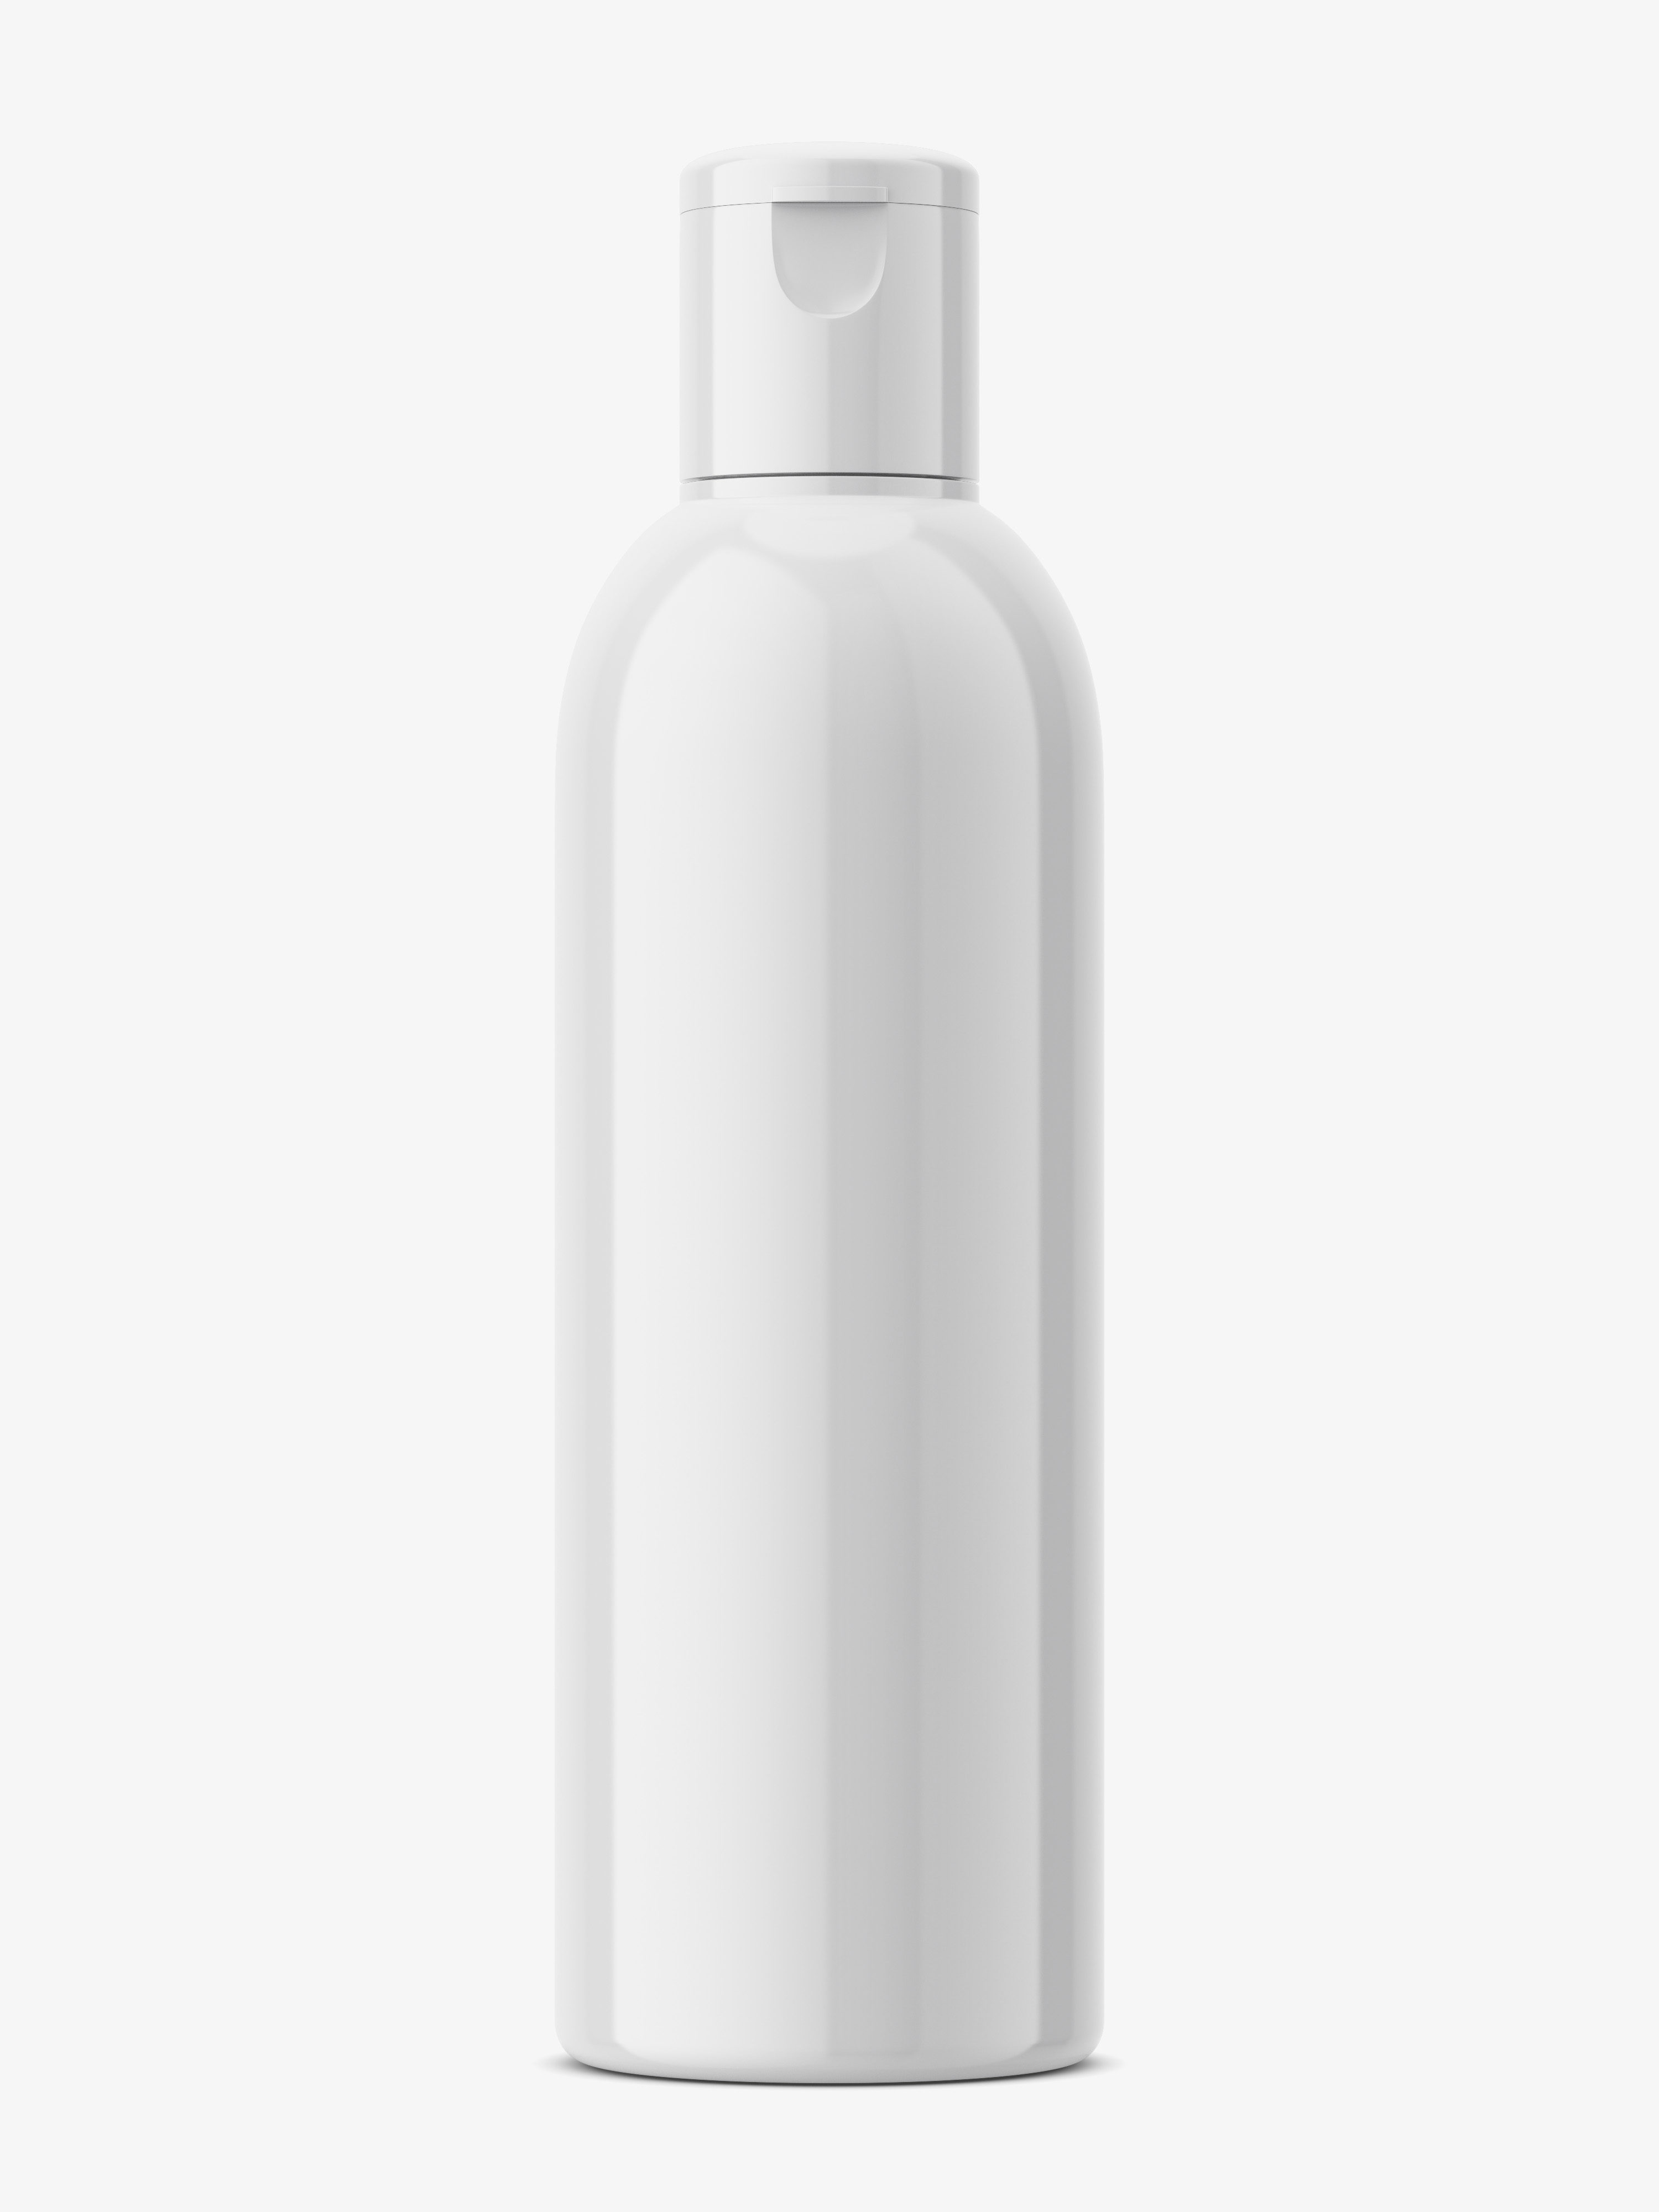 Бутылки для геля для душа. Мокап флакон 10 ml. Емкость для дозатора Blanco (объем 300 мл) арт. 122237. Letech Expert line easy dispense Bottle (145ml) - бутылка с дозатором. Флакон 100 мл мокап.